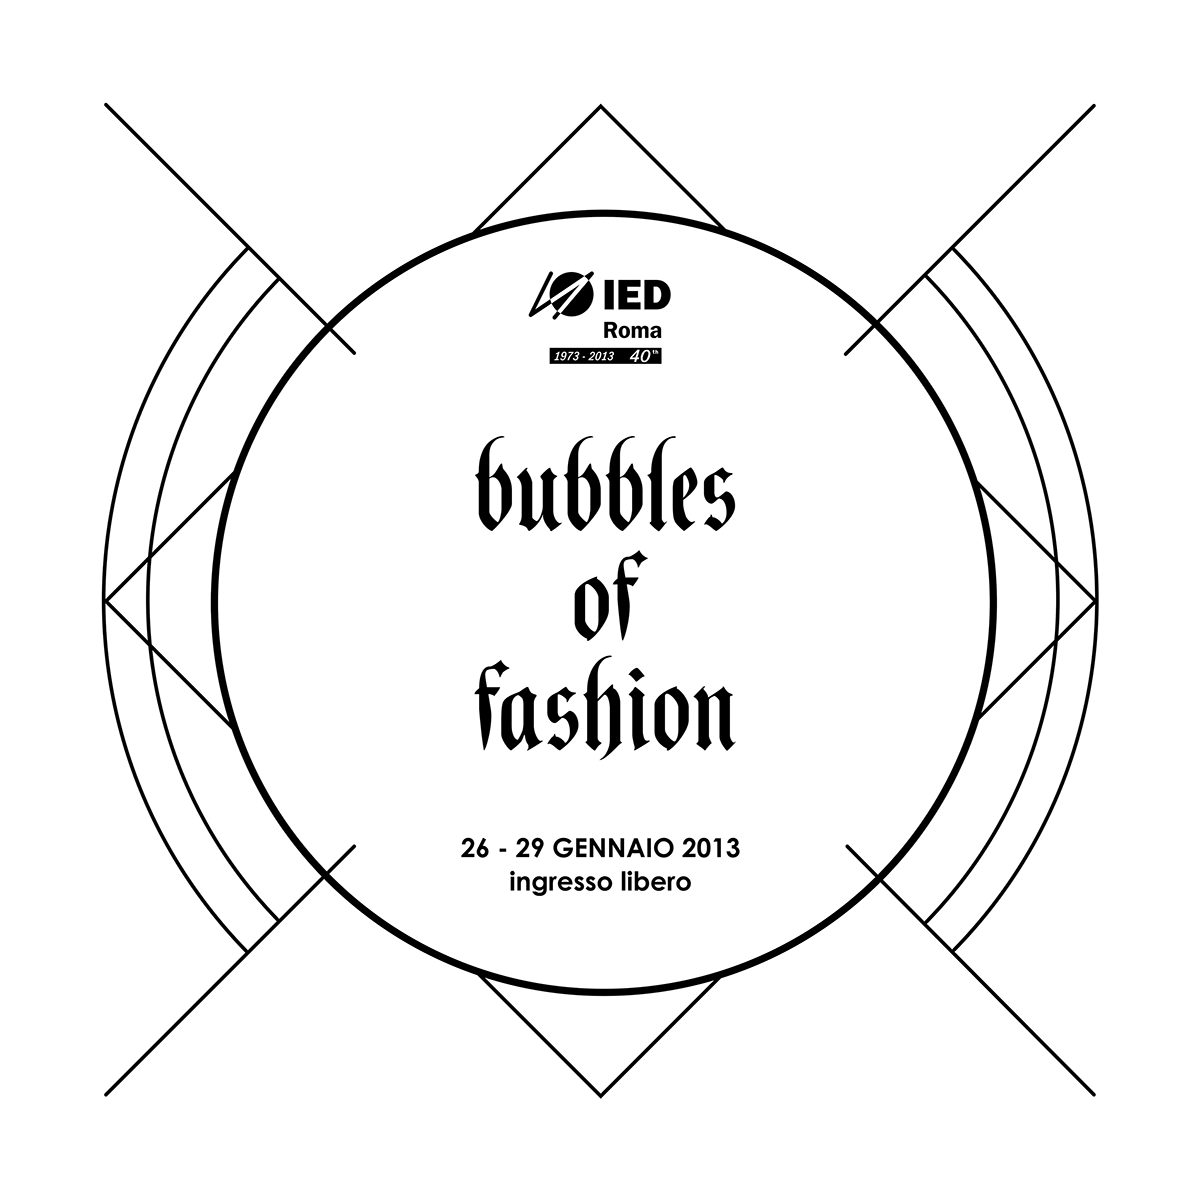 Adobe Portfolio bubbles Event moda ied